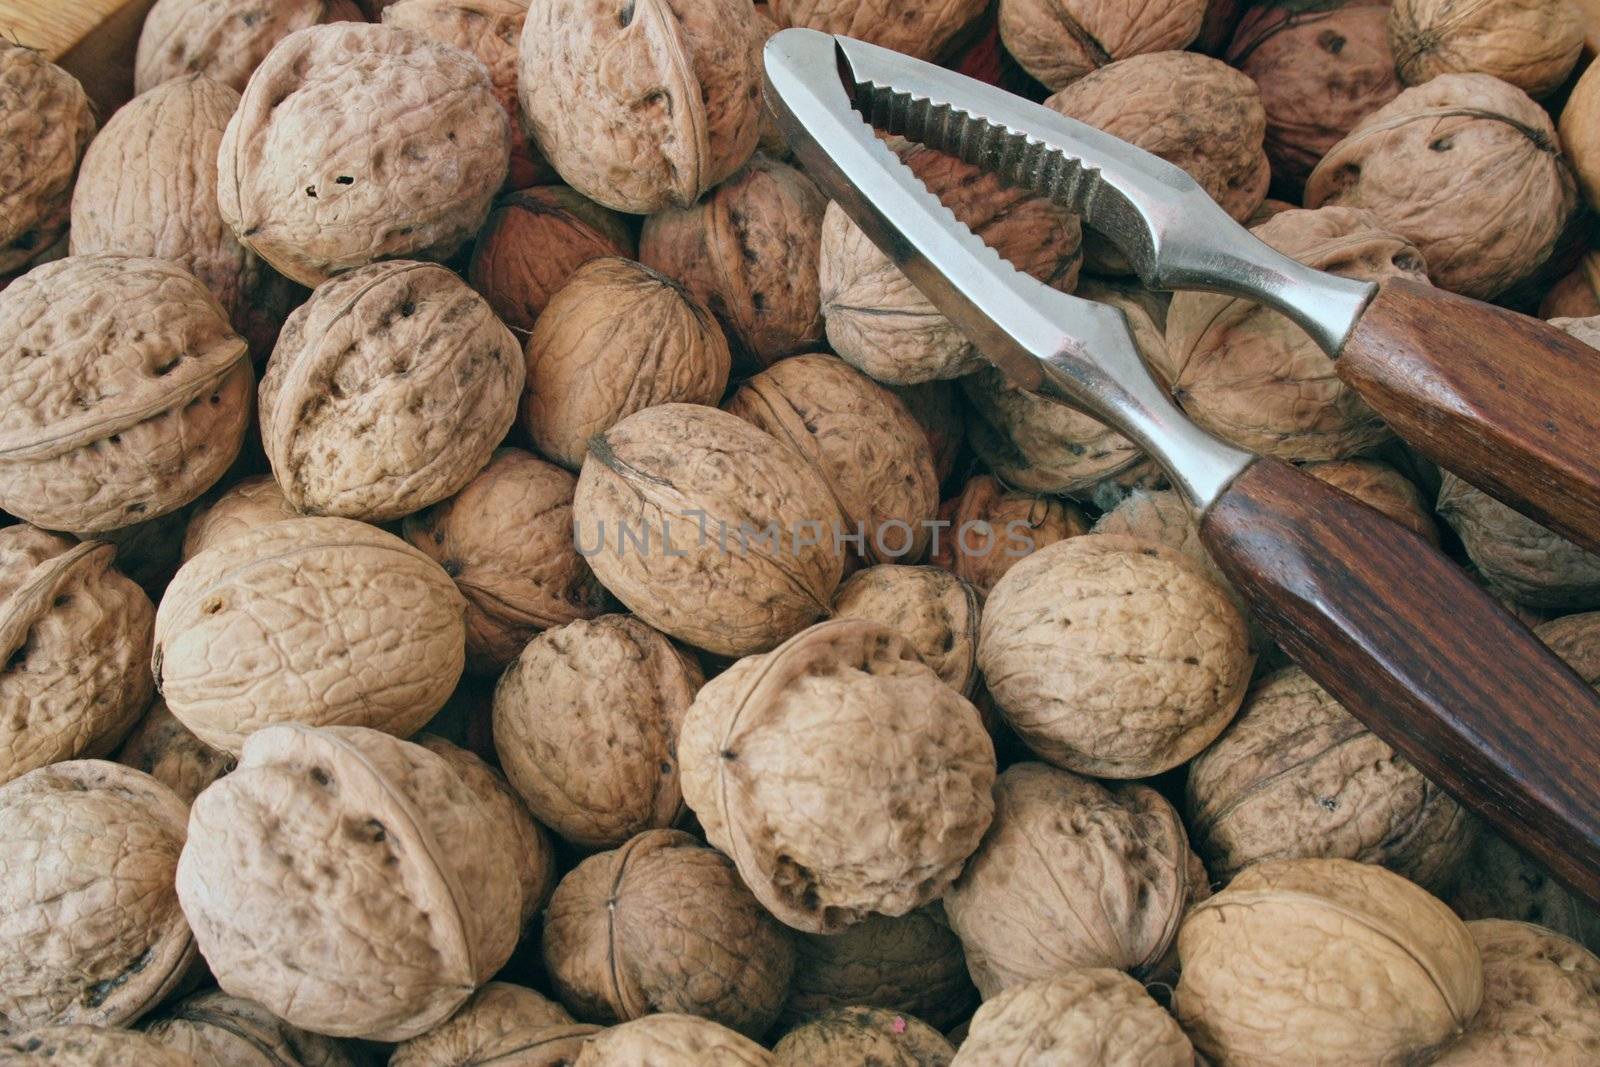 A nutcracker lying on a pile of walnuts.